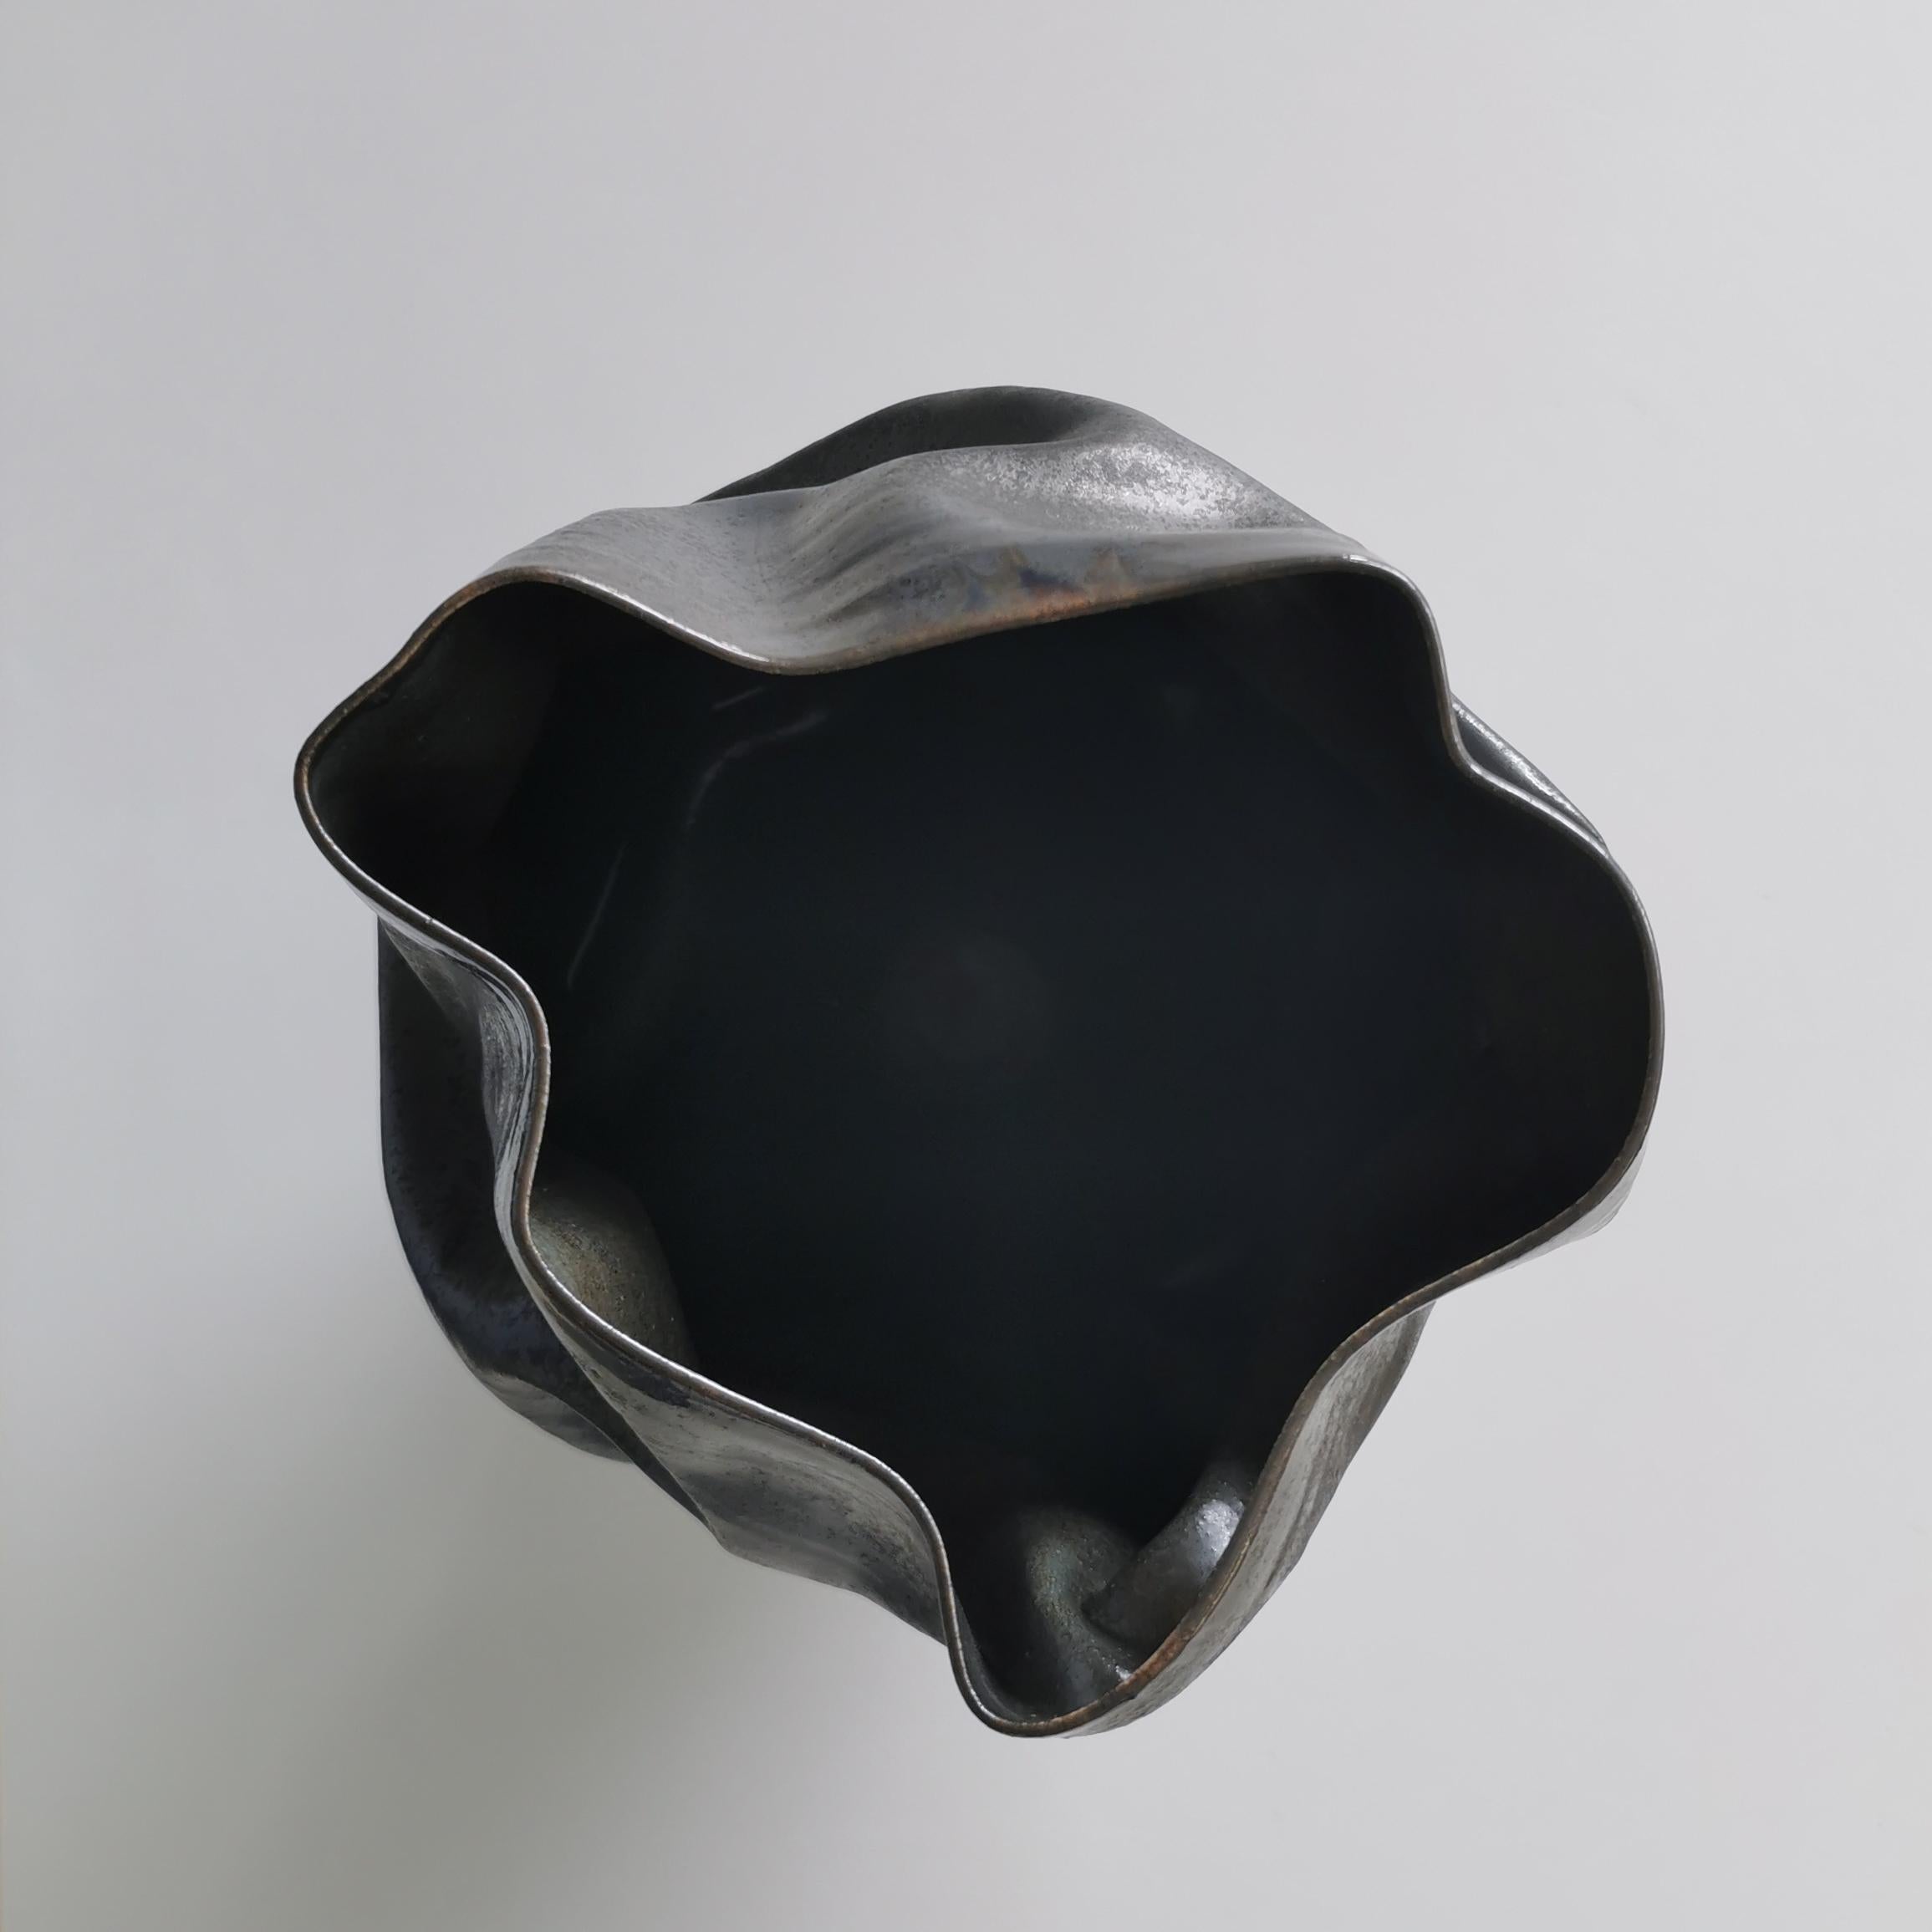 Unique Ceramic Sculpture Vessel N.57, Black Dehydrated Form, Objet d'Art 2